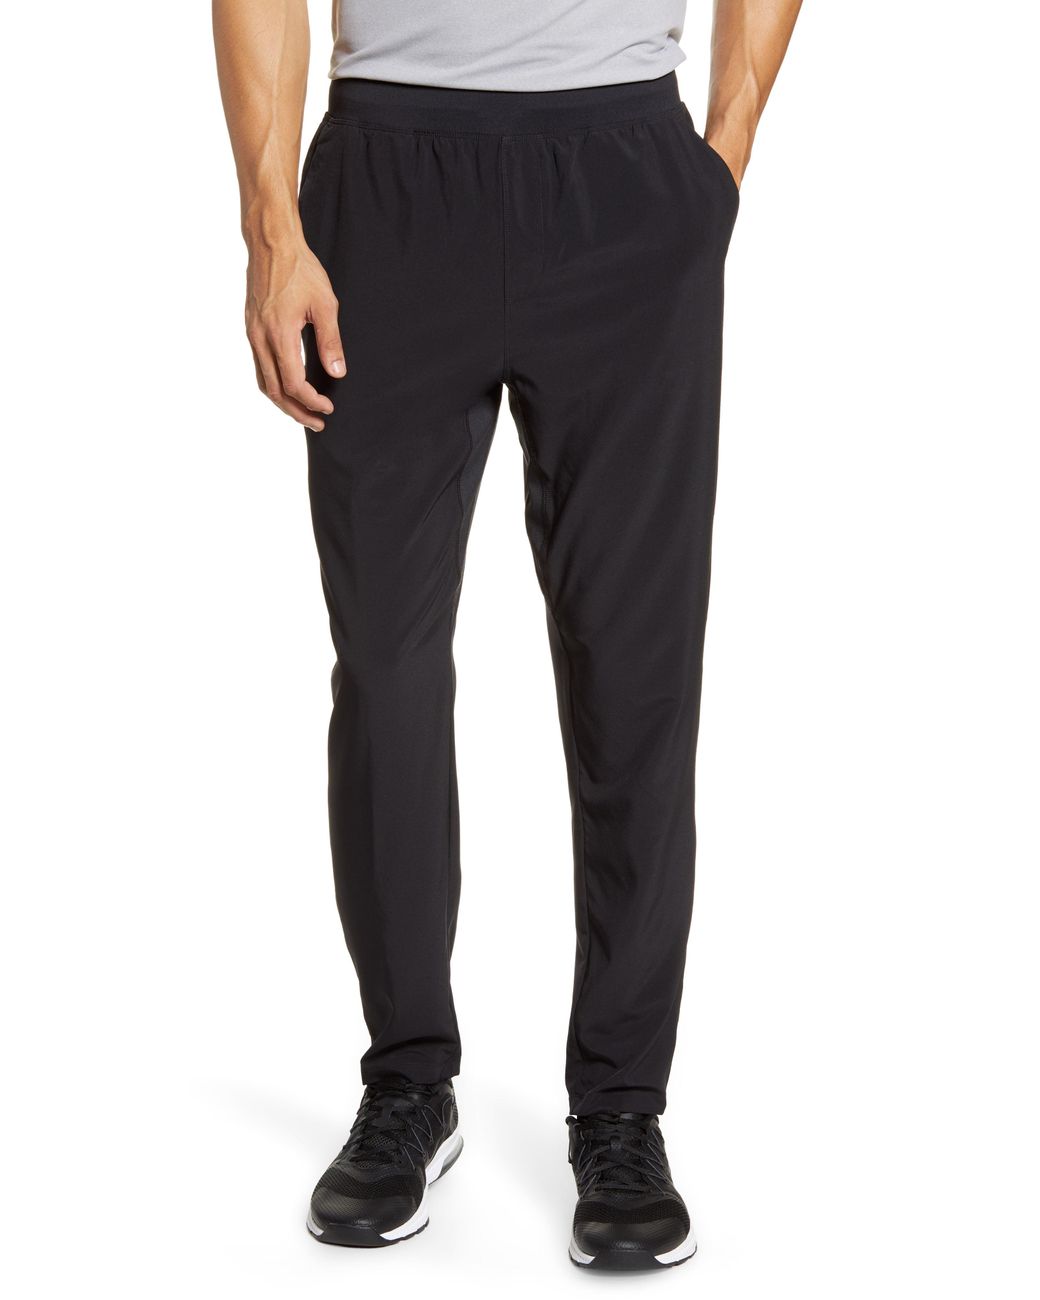 Zella Core Pocket Stretch Woven Pants in Black for Men - Lyst